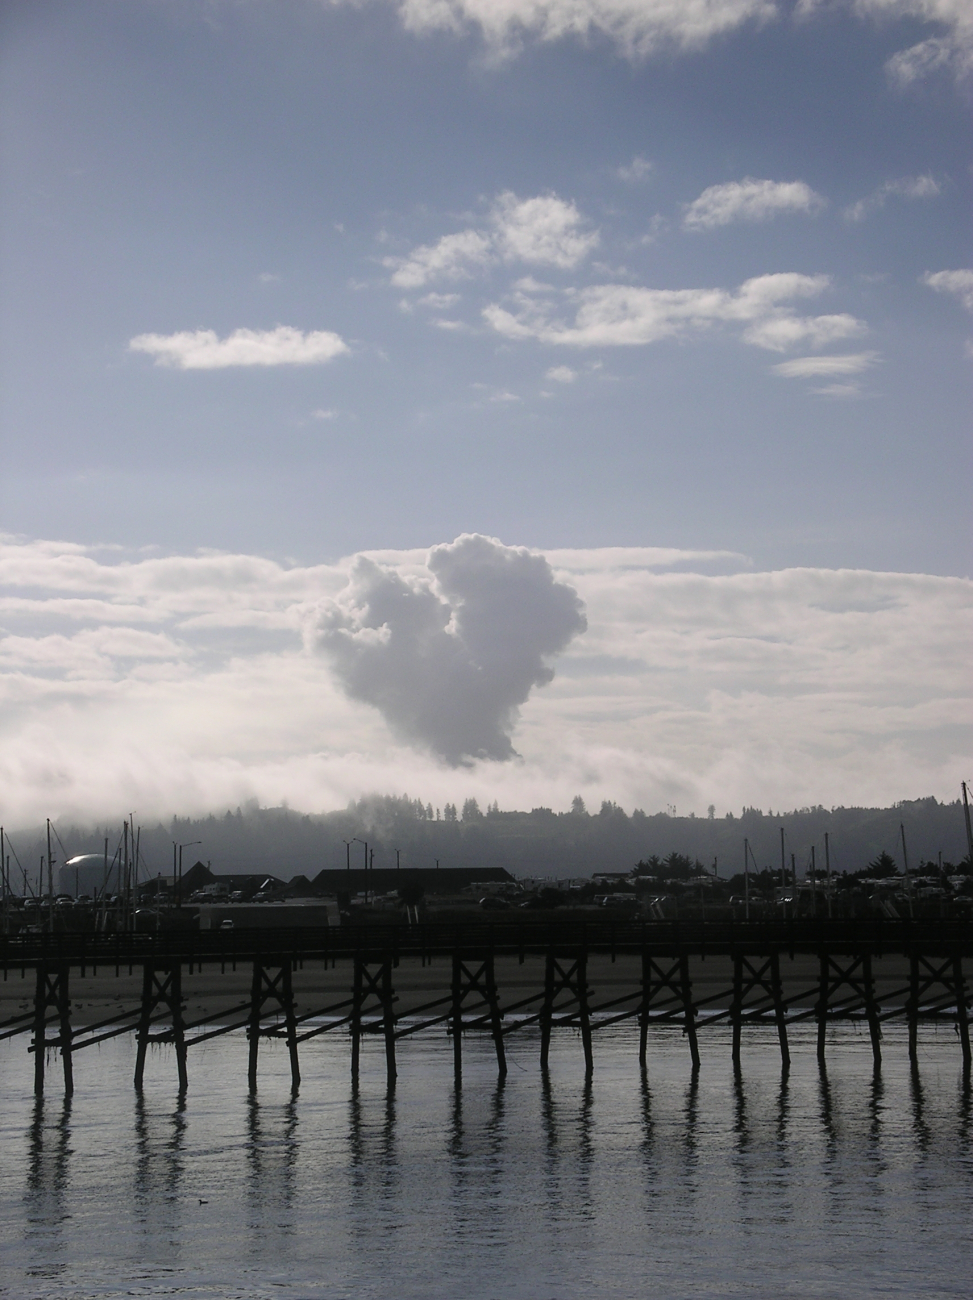 A heart shape cloud over Newport, Oregon - gives rise to an I love Newportsentiment